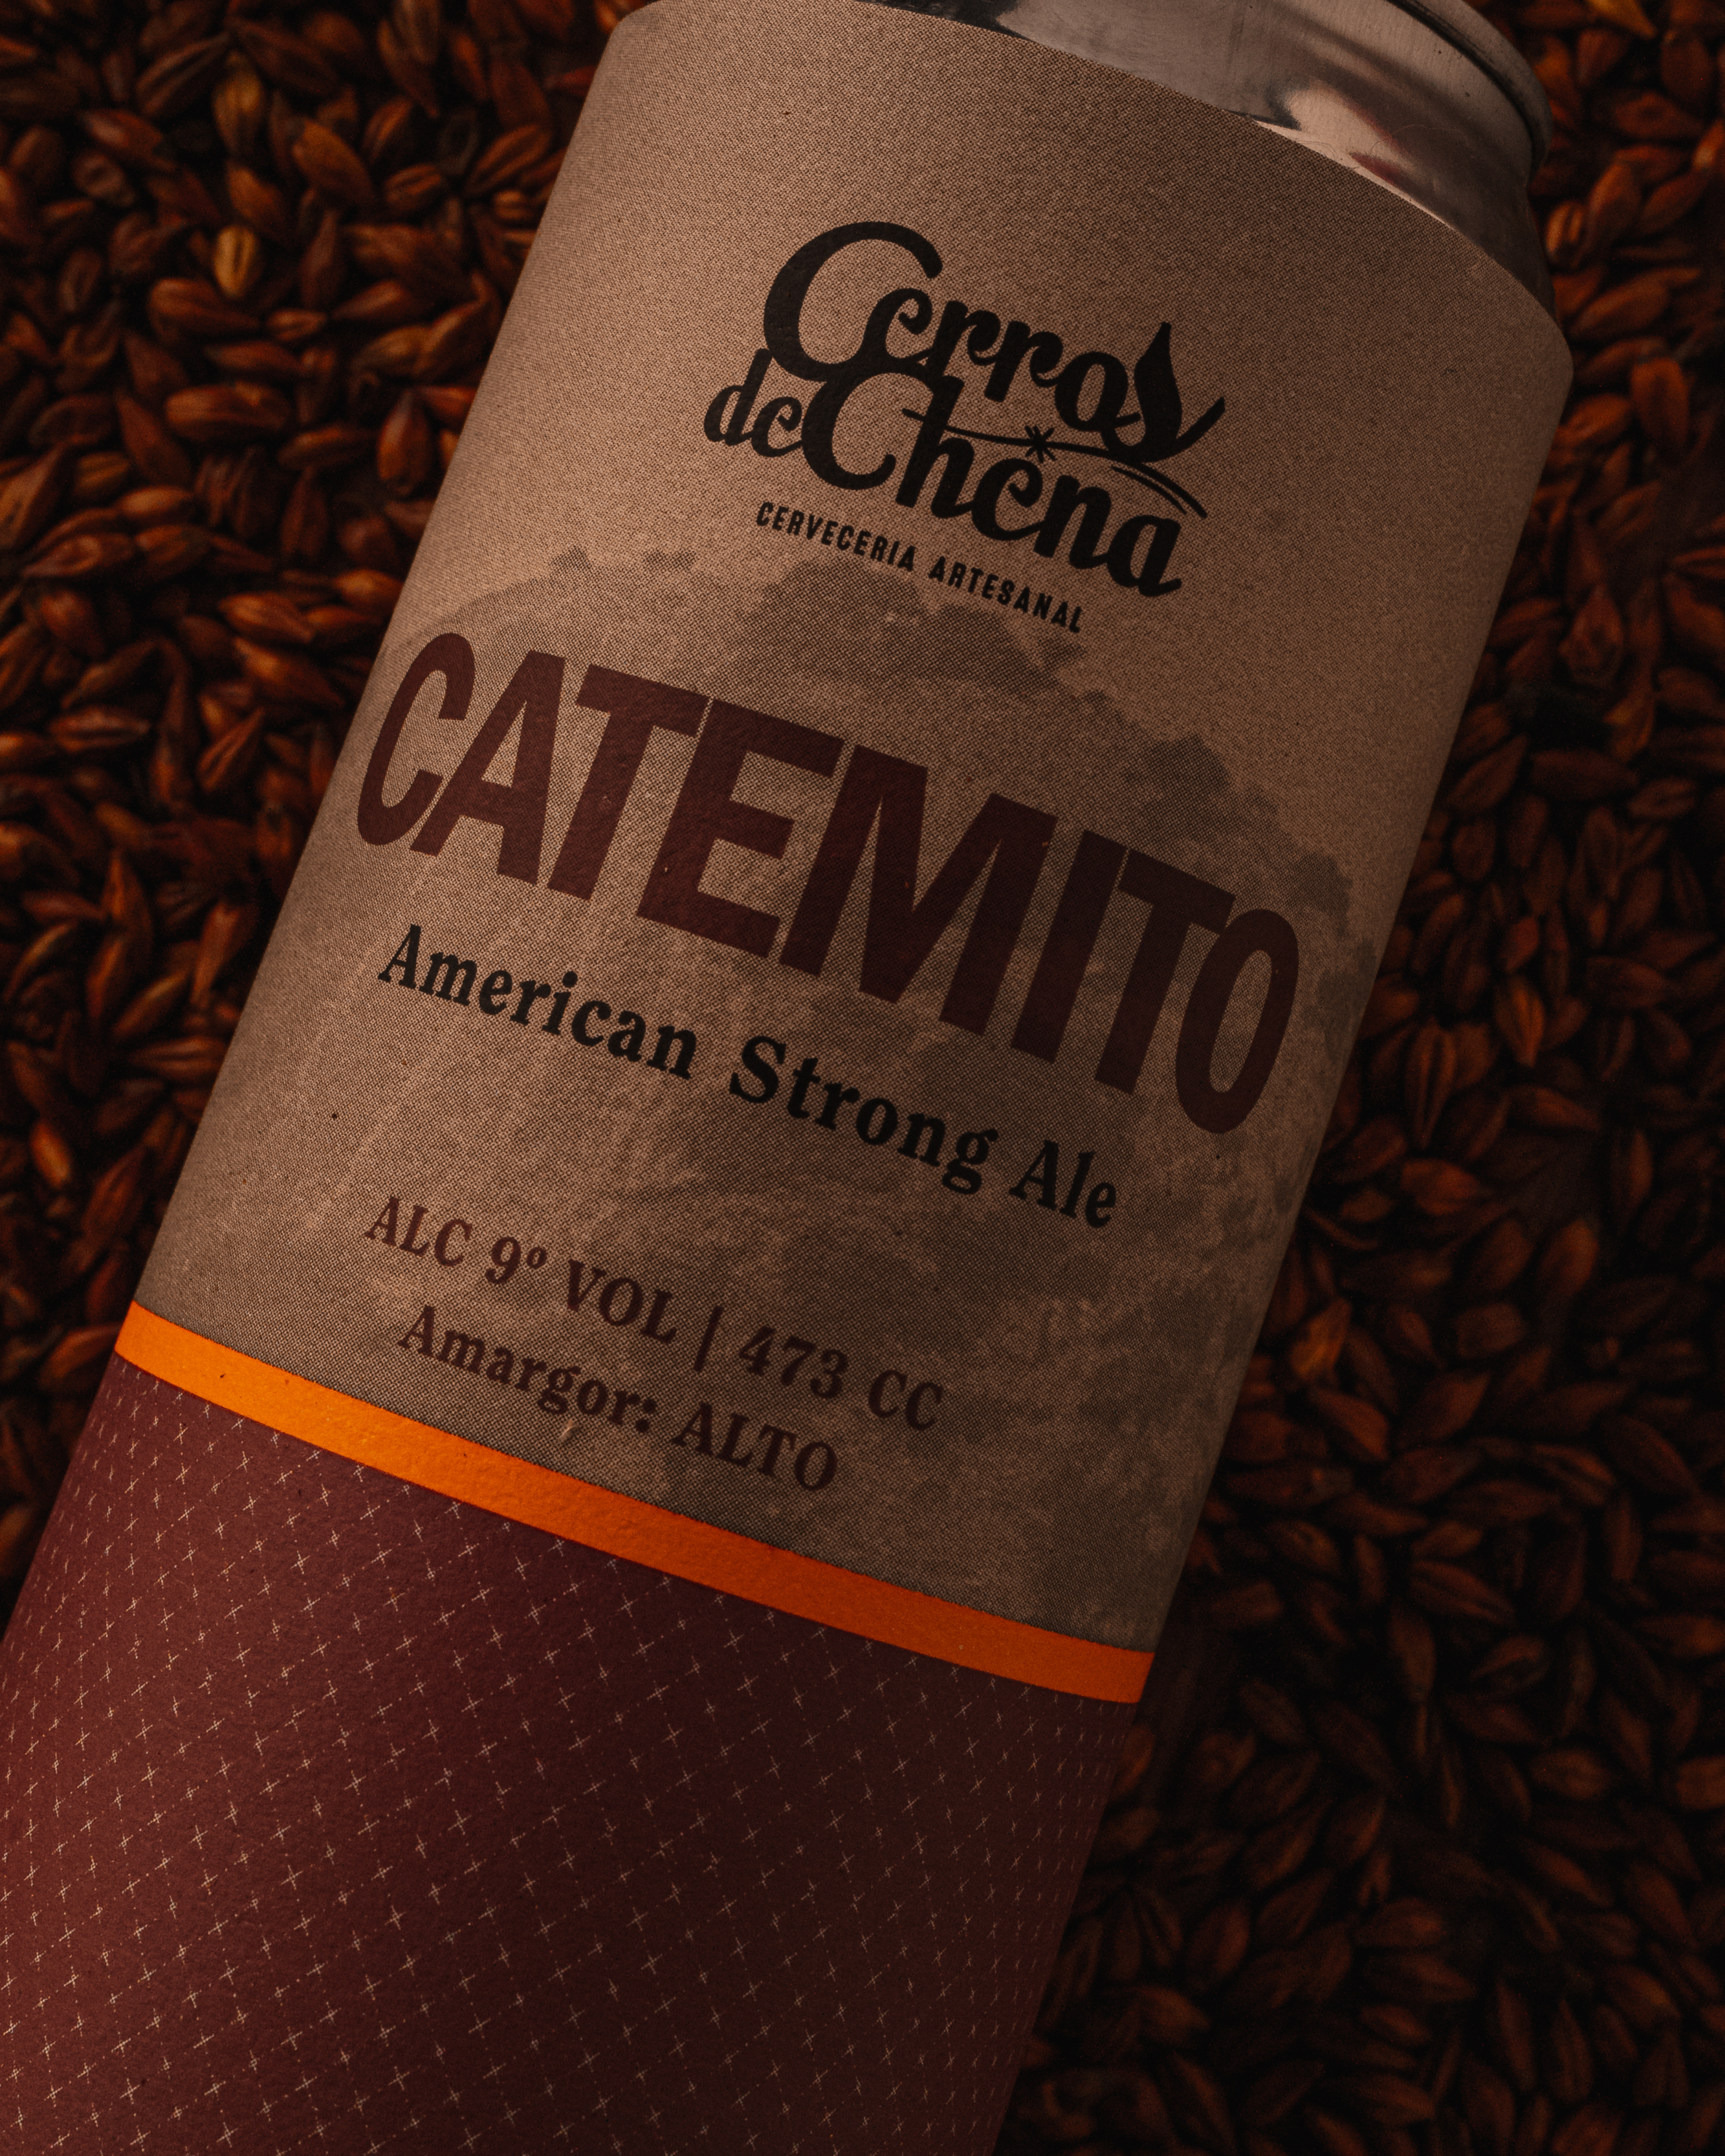 Catemito | American Strong Ale